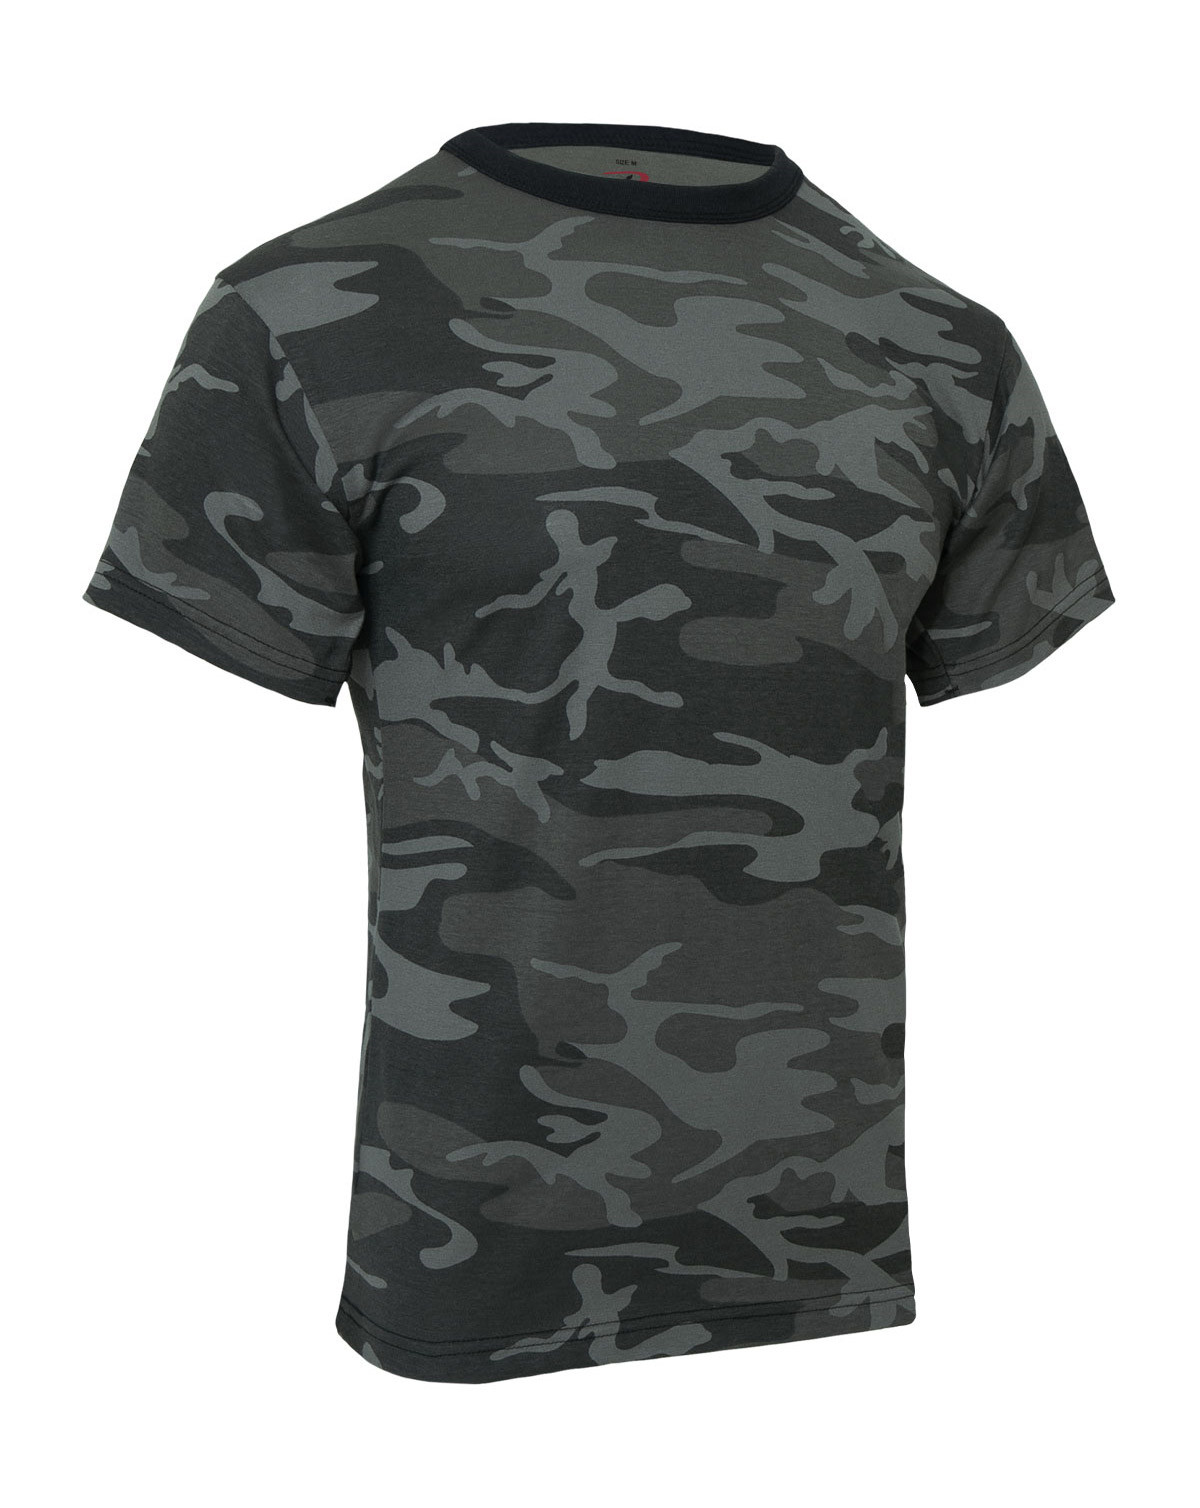 6: Rothco T-shirt - Mange Camouflager (Black Camo, XL)